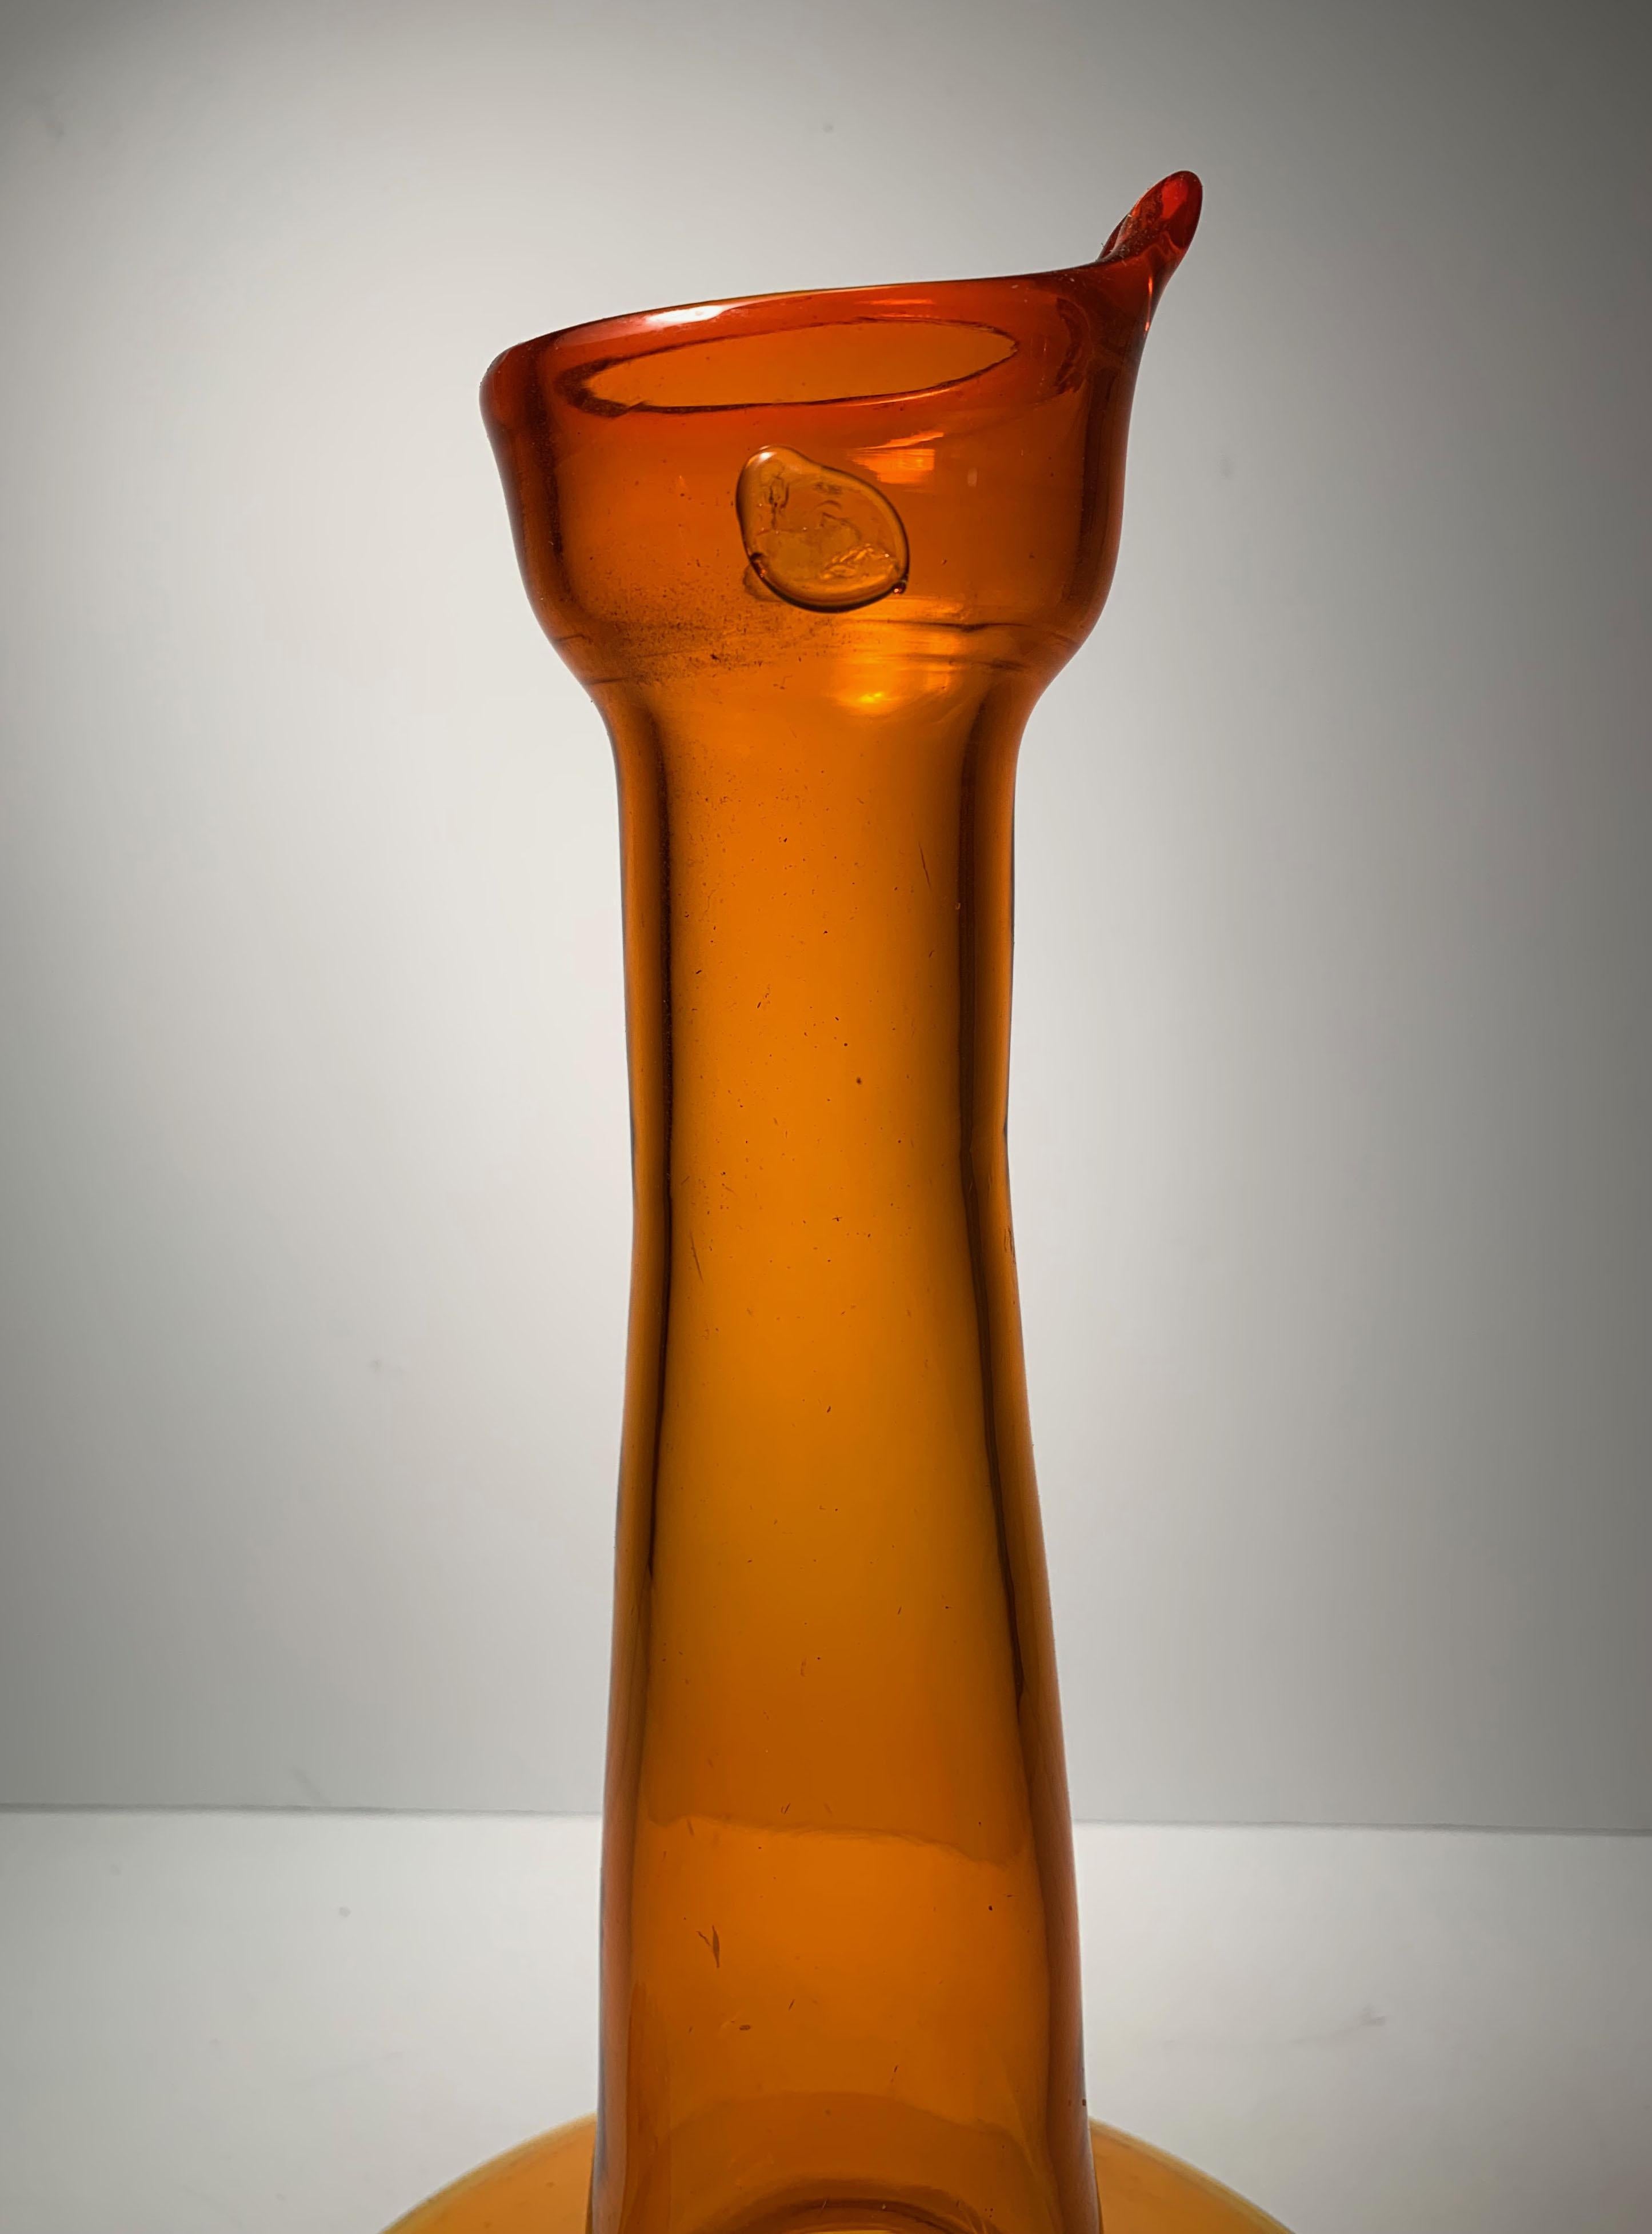 Rare Blenko 5410 bird or rooster vase by Wayne Husted in Tangerine.